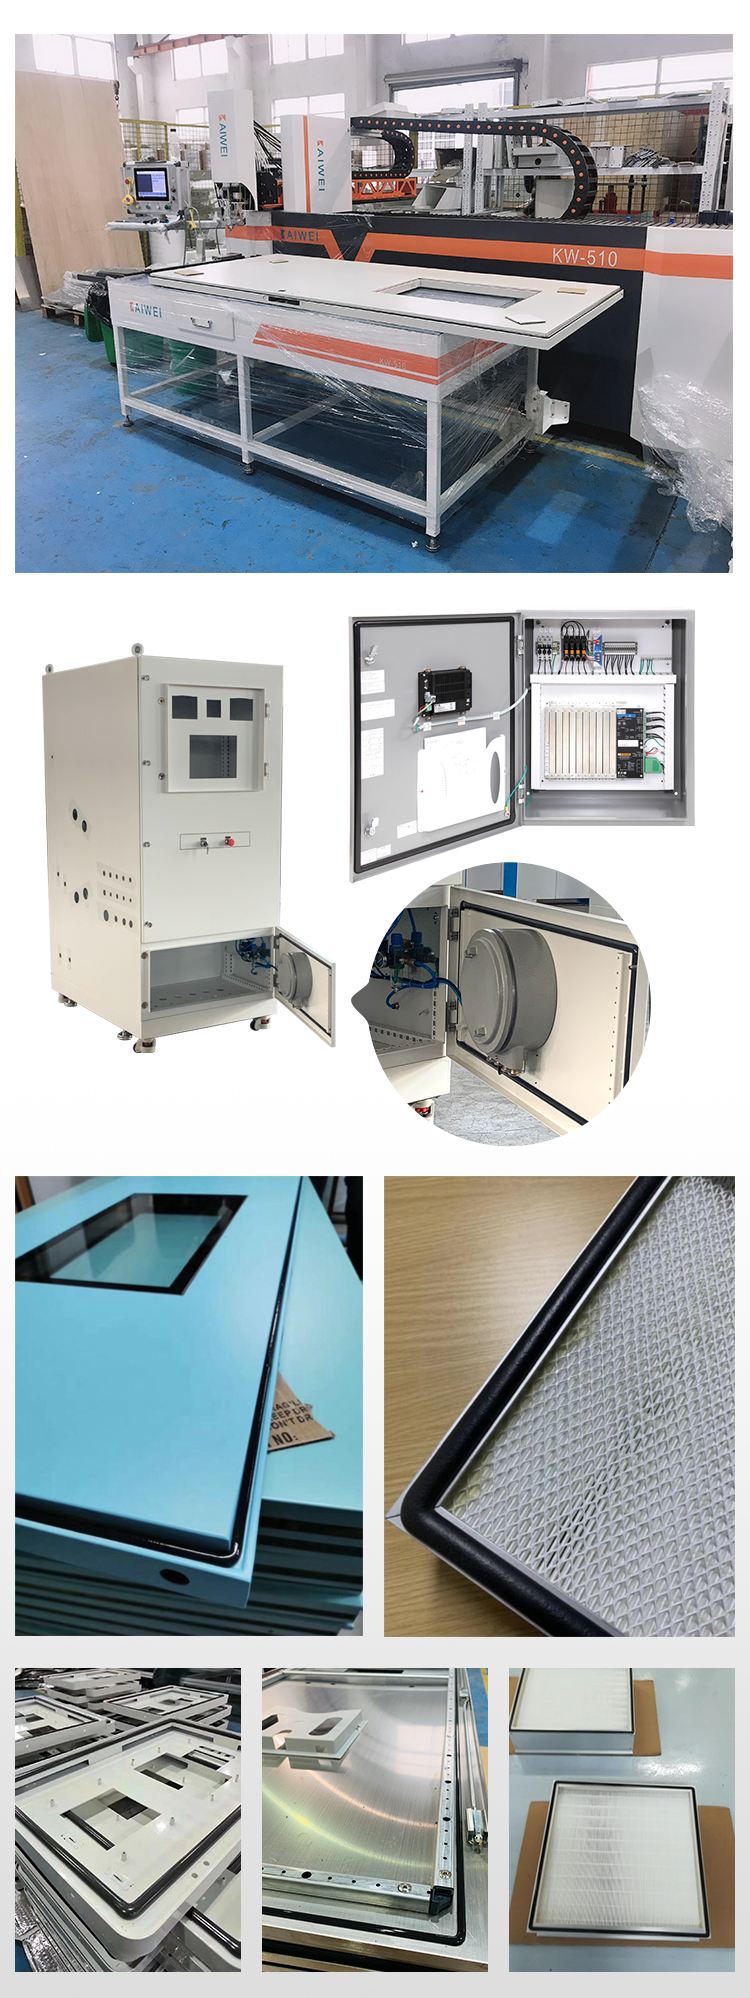 KW530 pu foam gasket machine for enclosure/pu seal and pu gasket making machine